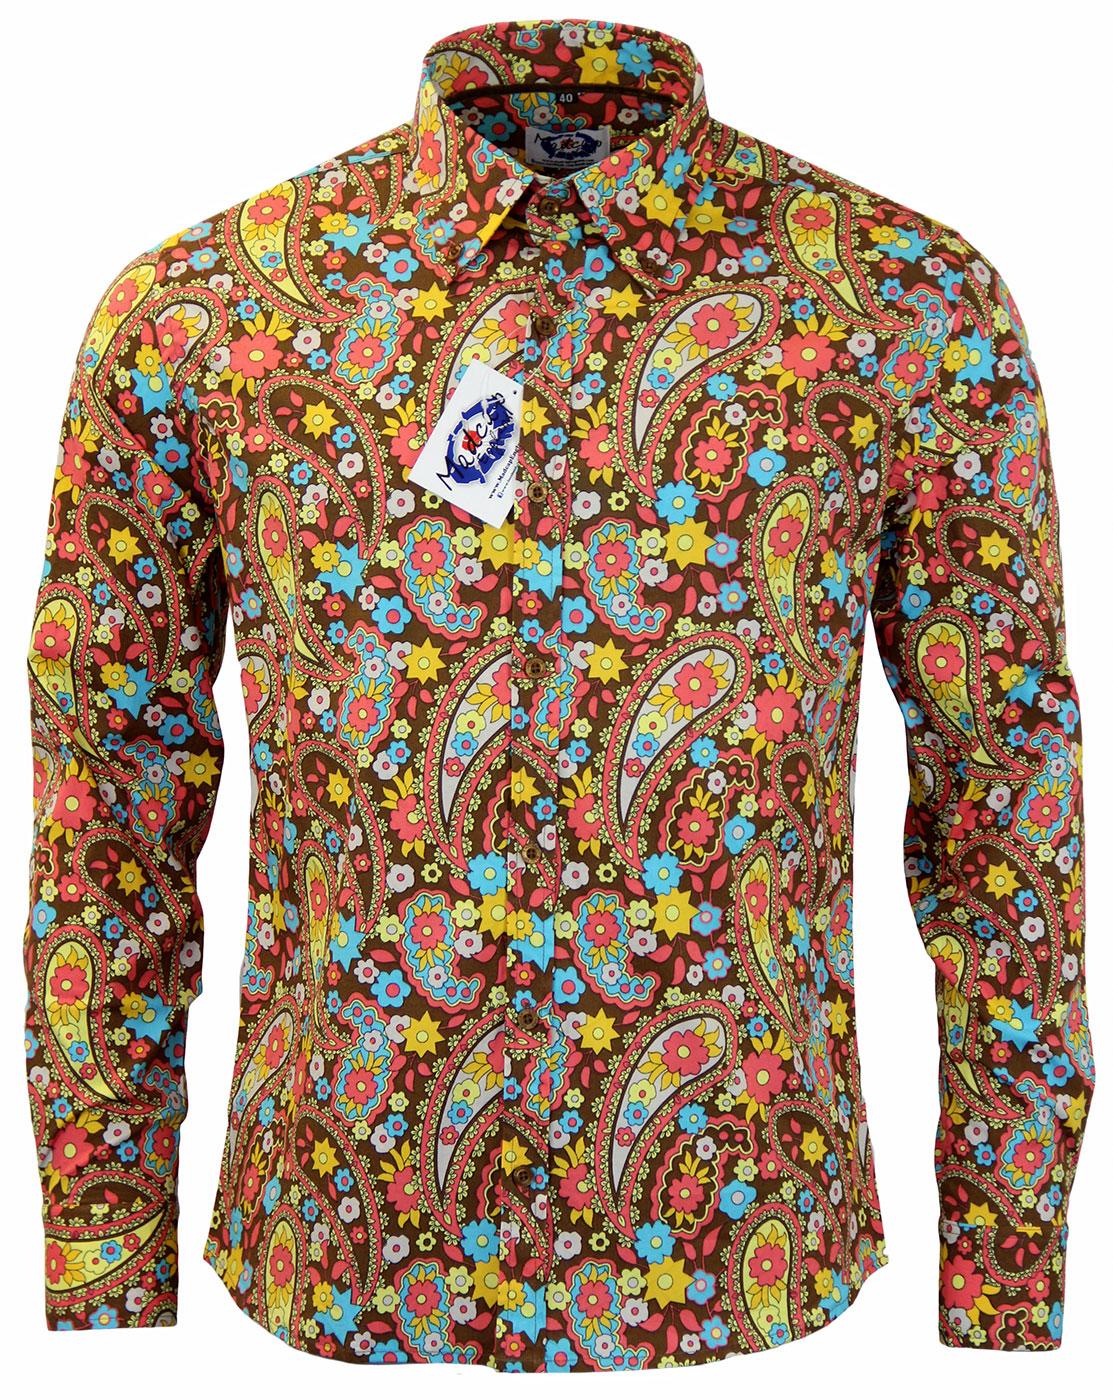 Trip Paisley MADCAP ENGLAND 60s Mod Floral Shirt